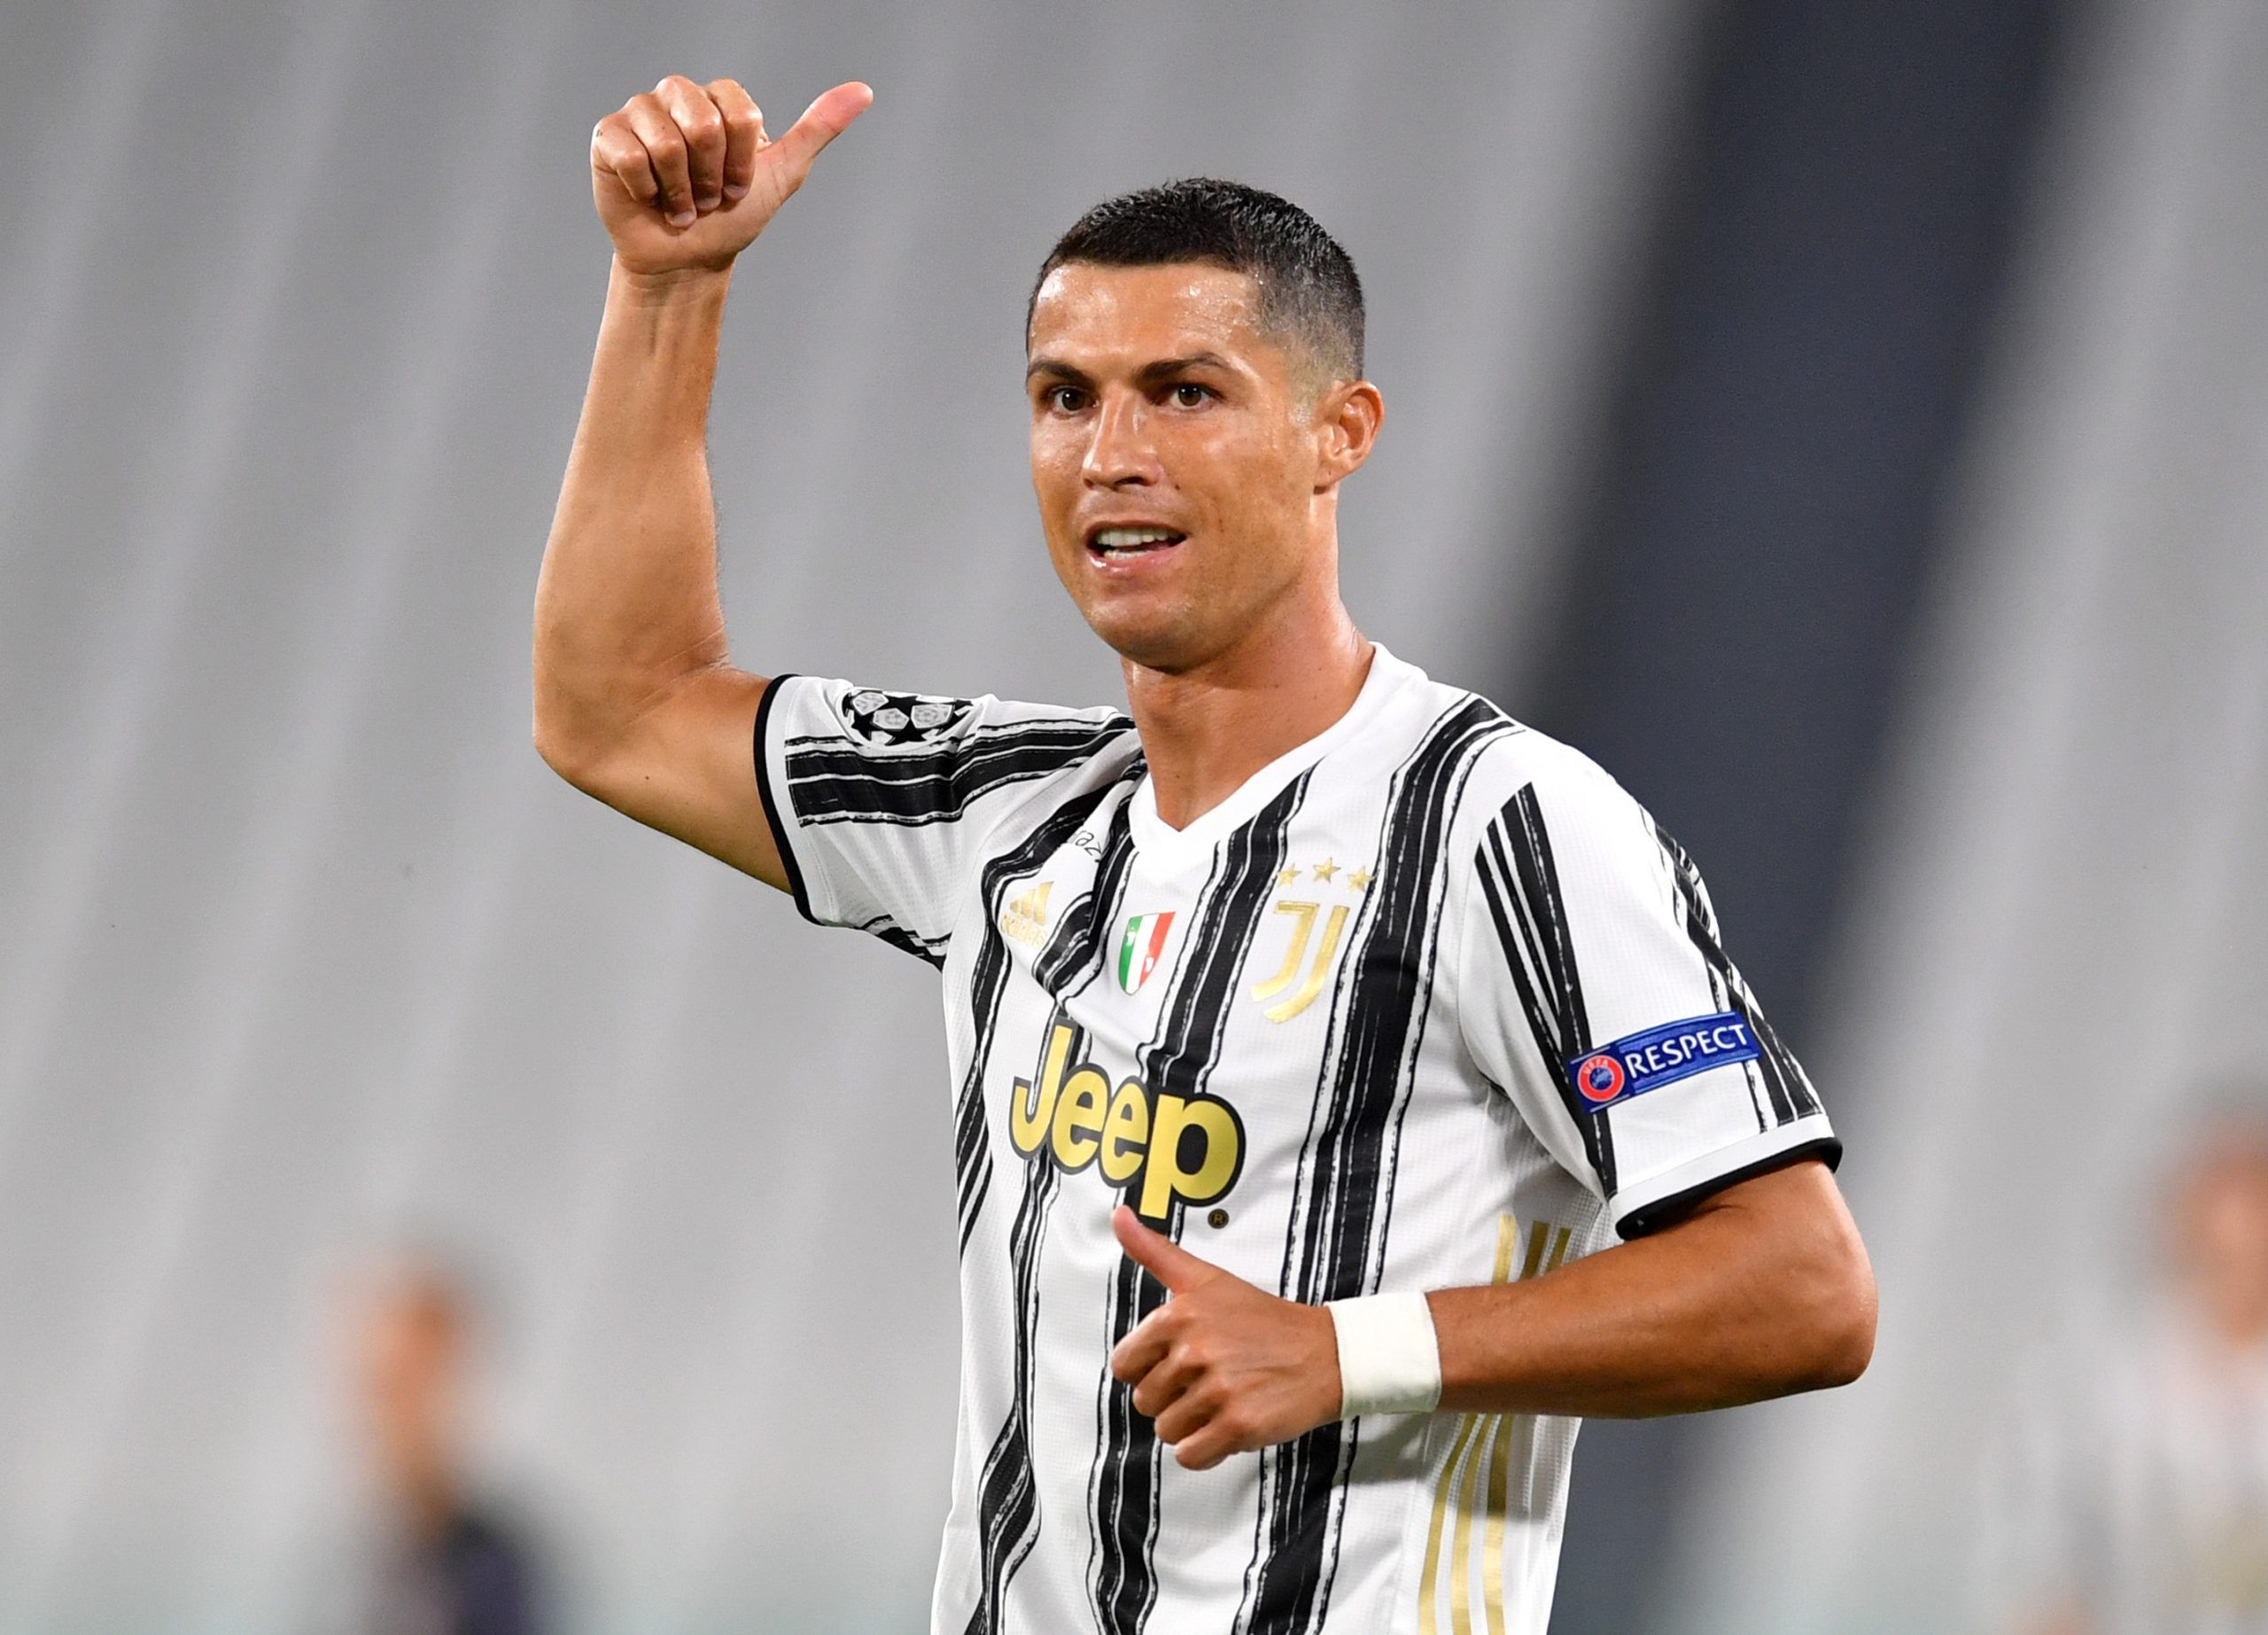 Juventus Cristiano Ronaldo Hairstyle 2021 Juventus C Ronaldo Fait Le Bilan De 2020 Et Annonce